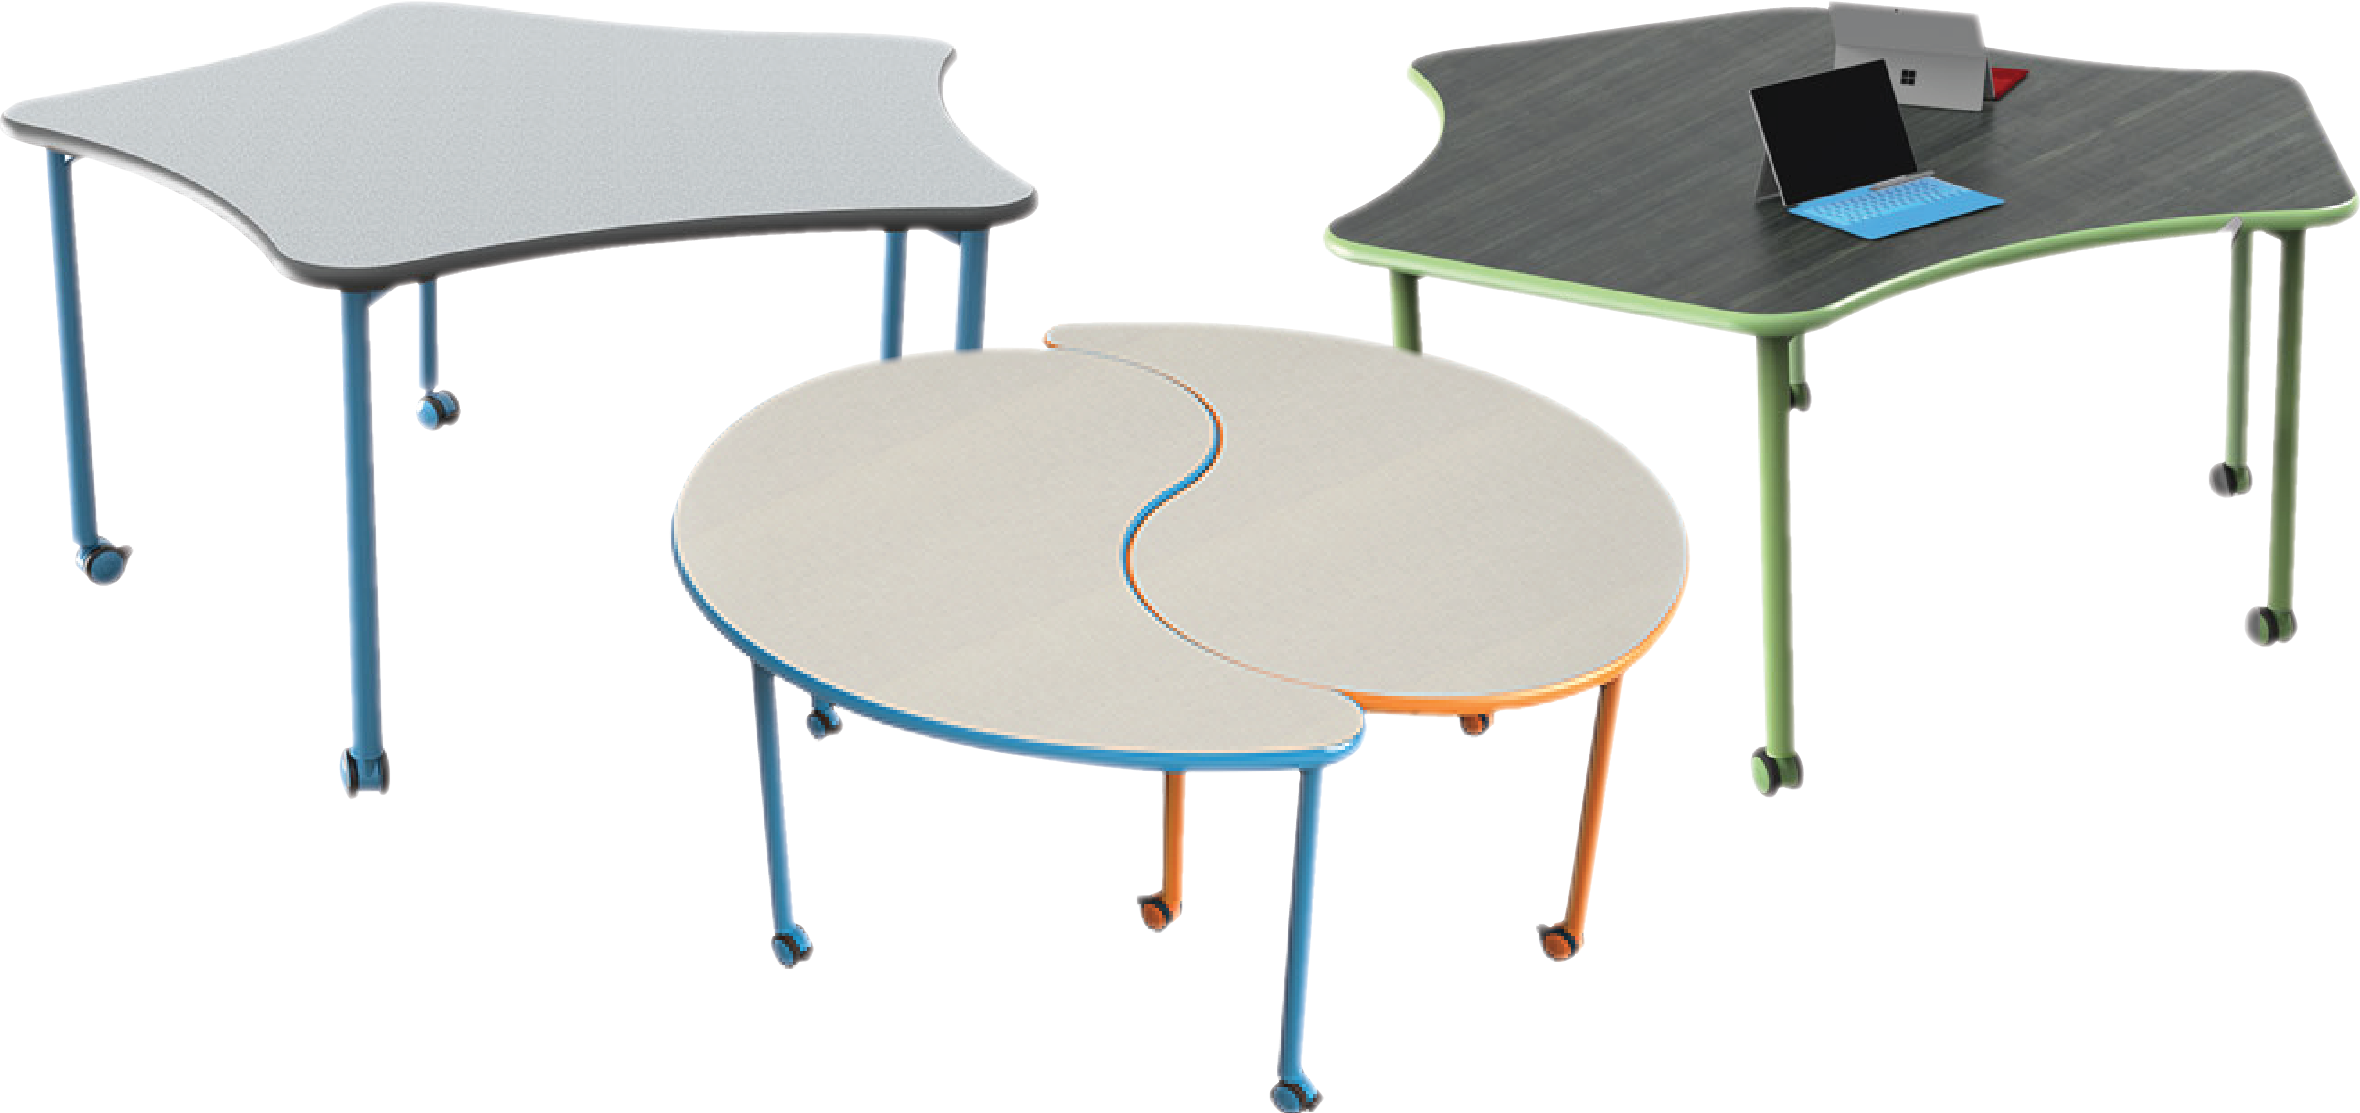 Lone Star Furnishings - Texas School Furniture - elements tables